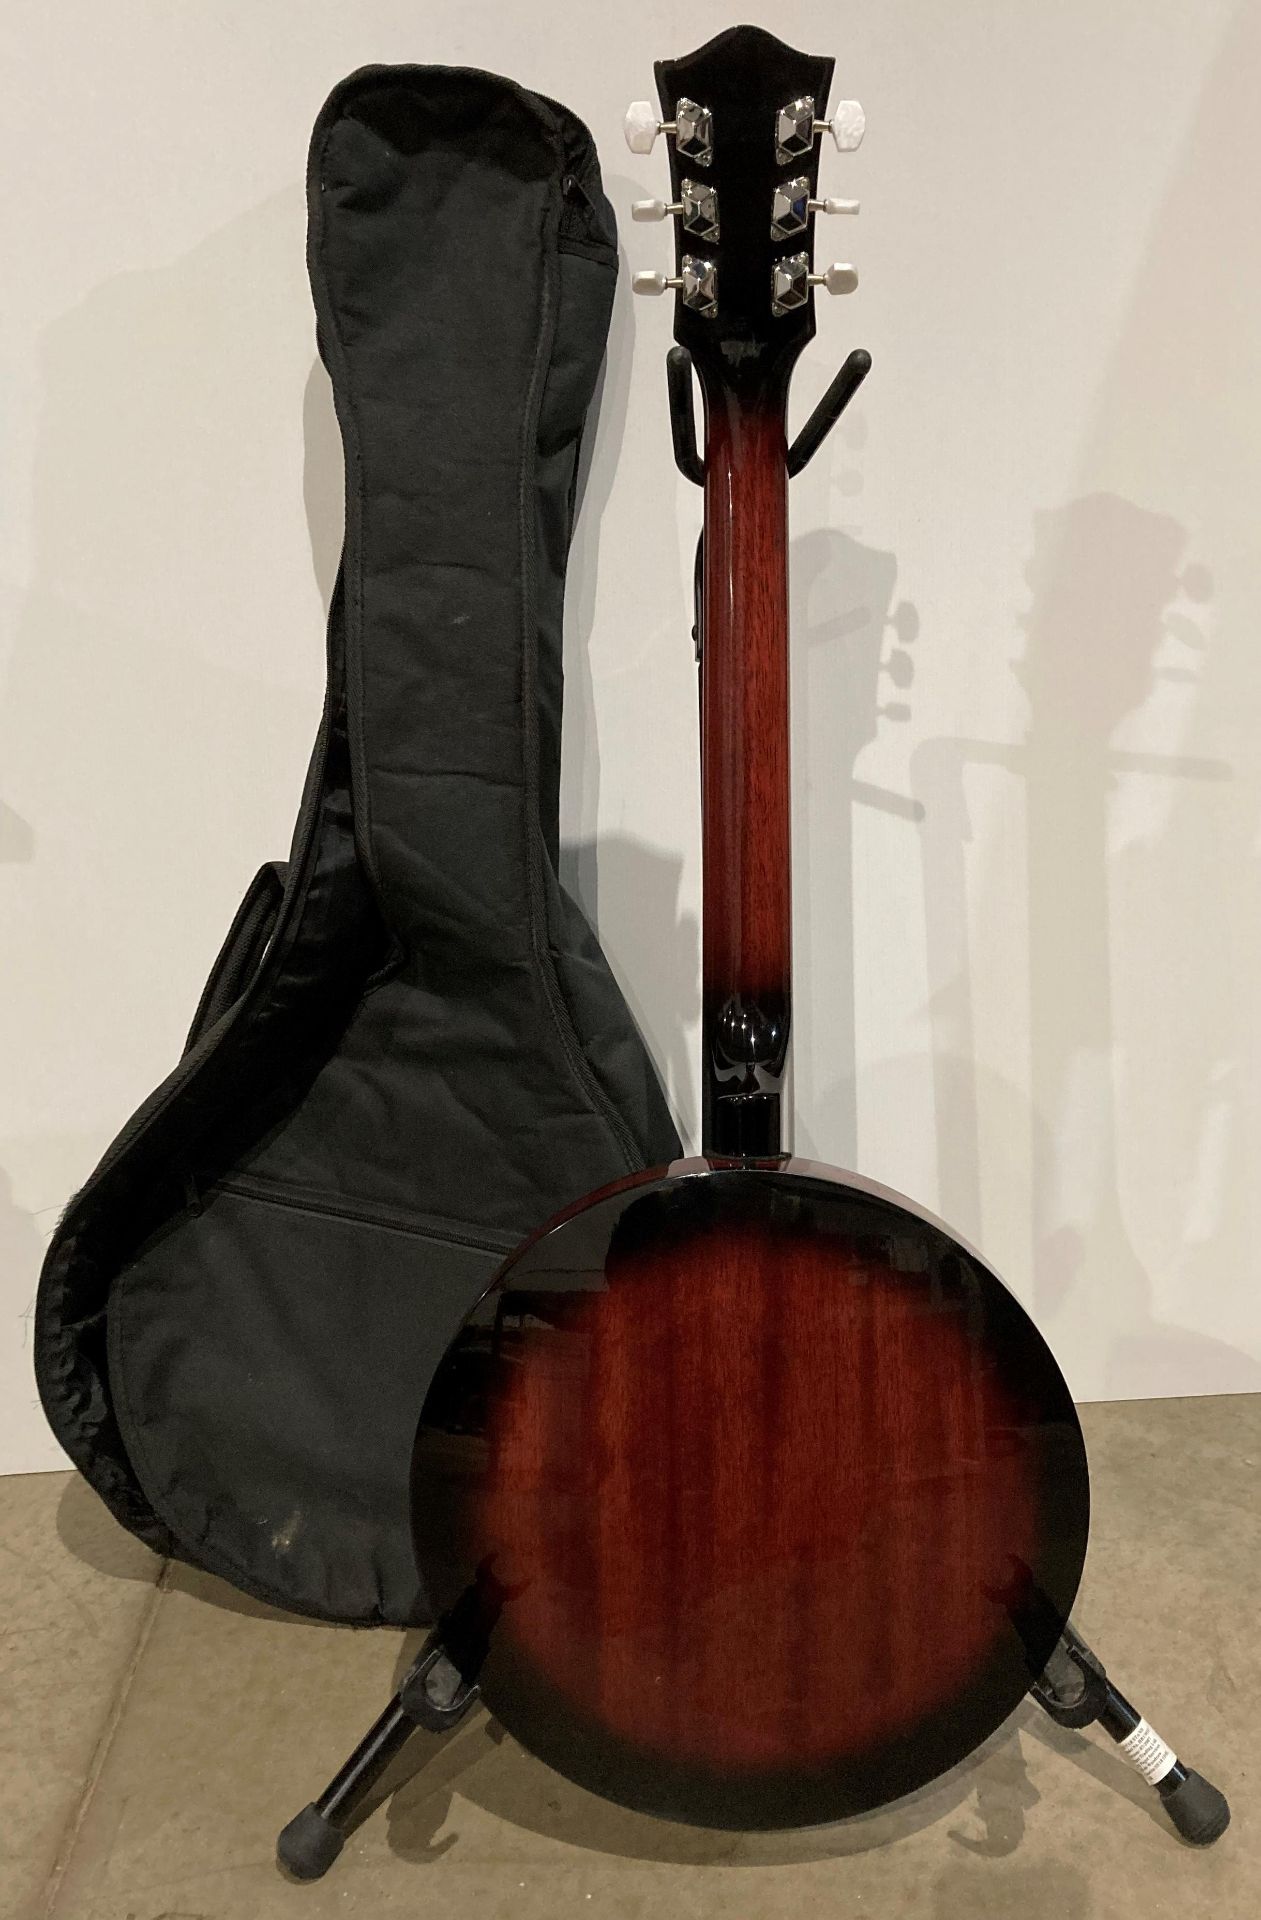 Countryman Banjo in a black ice bag (Saleroom location: S3) - Image 4 of 5